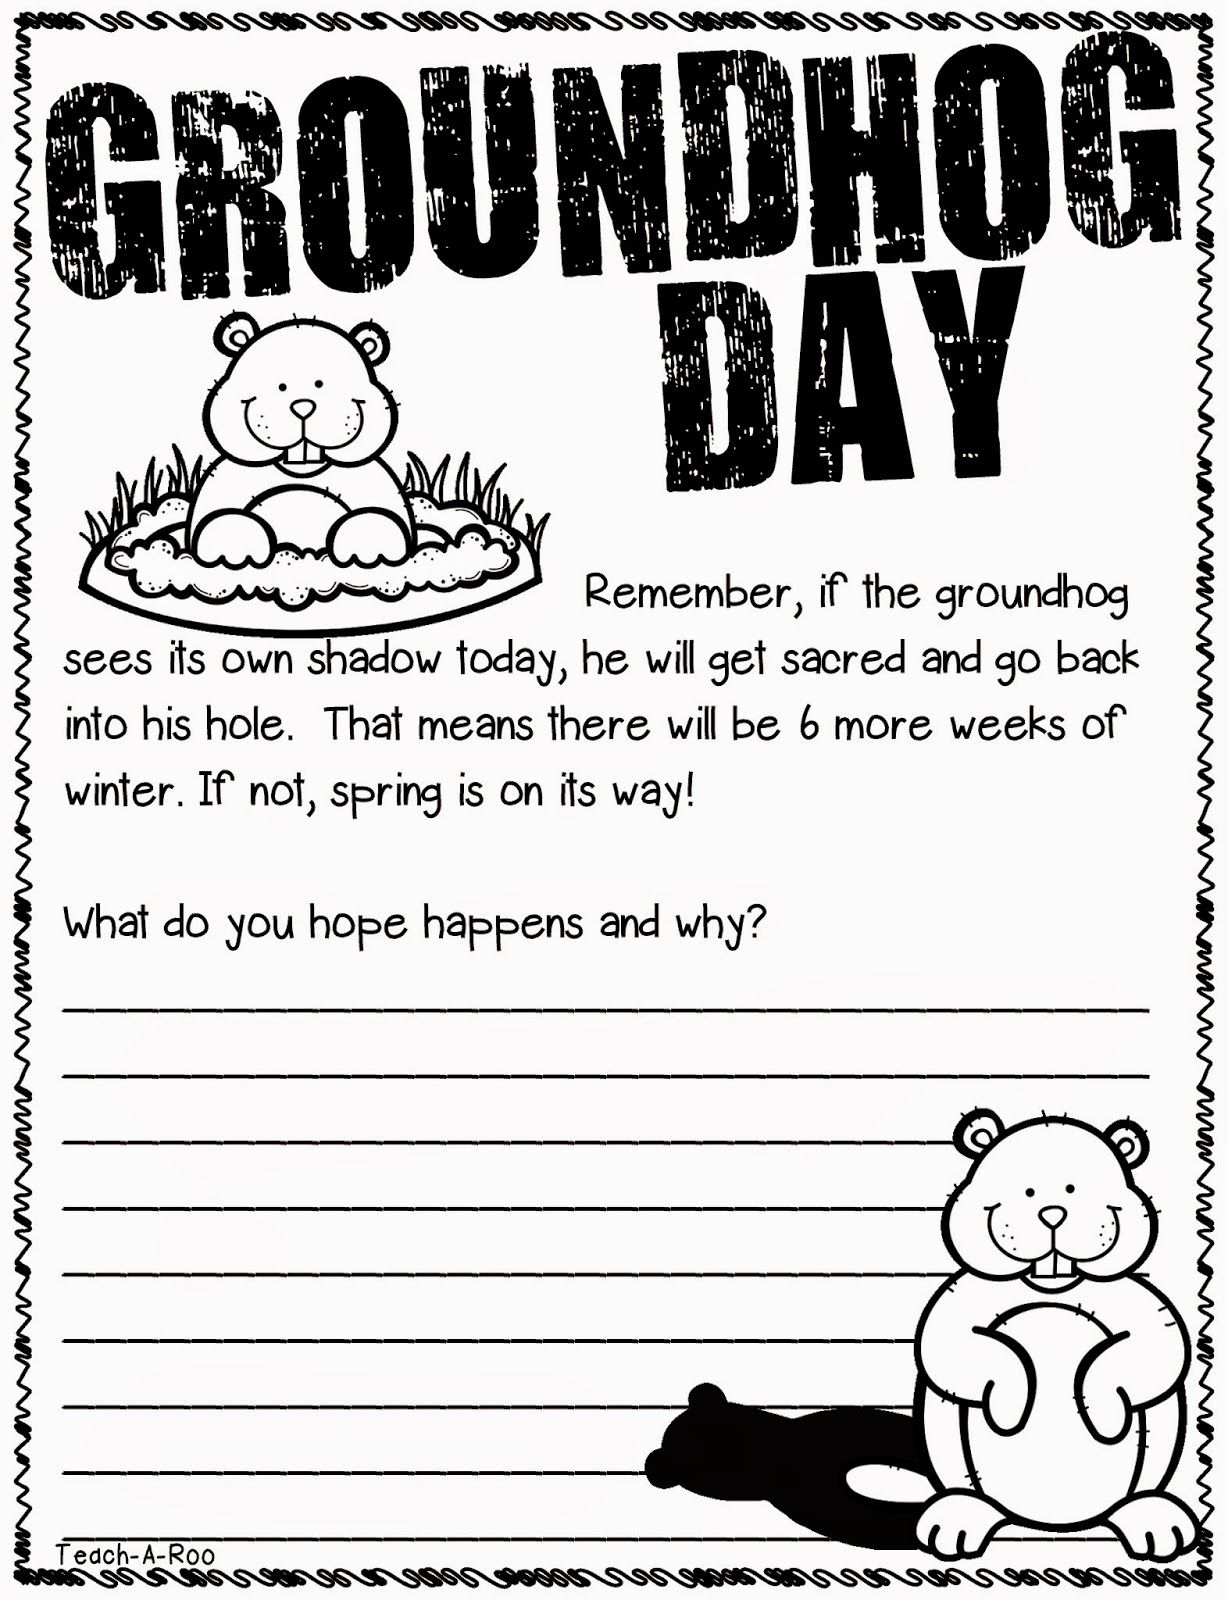 Groundhogs Make Me Giggle! (With Images) | Groundhog Day